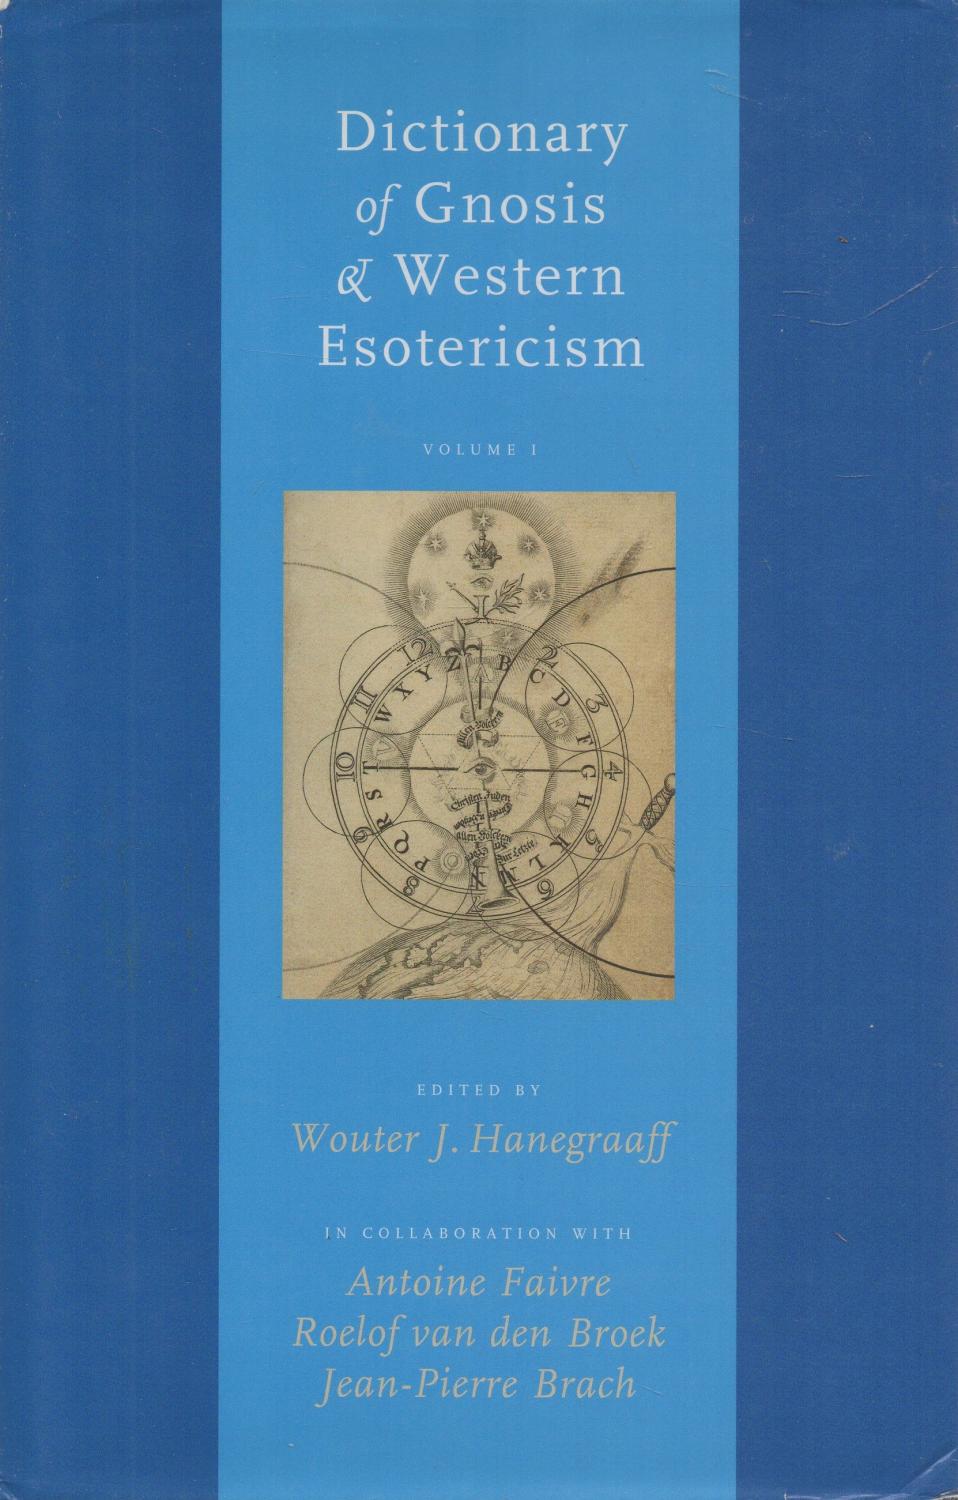 Dictionary of Gnosis & Western Esotericism, Volume I - Hanegraaff, Wouter J (ed.) with Antoine Faivre, Roelof van den Broek & Jean-Pierre Brach